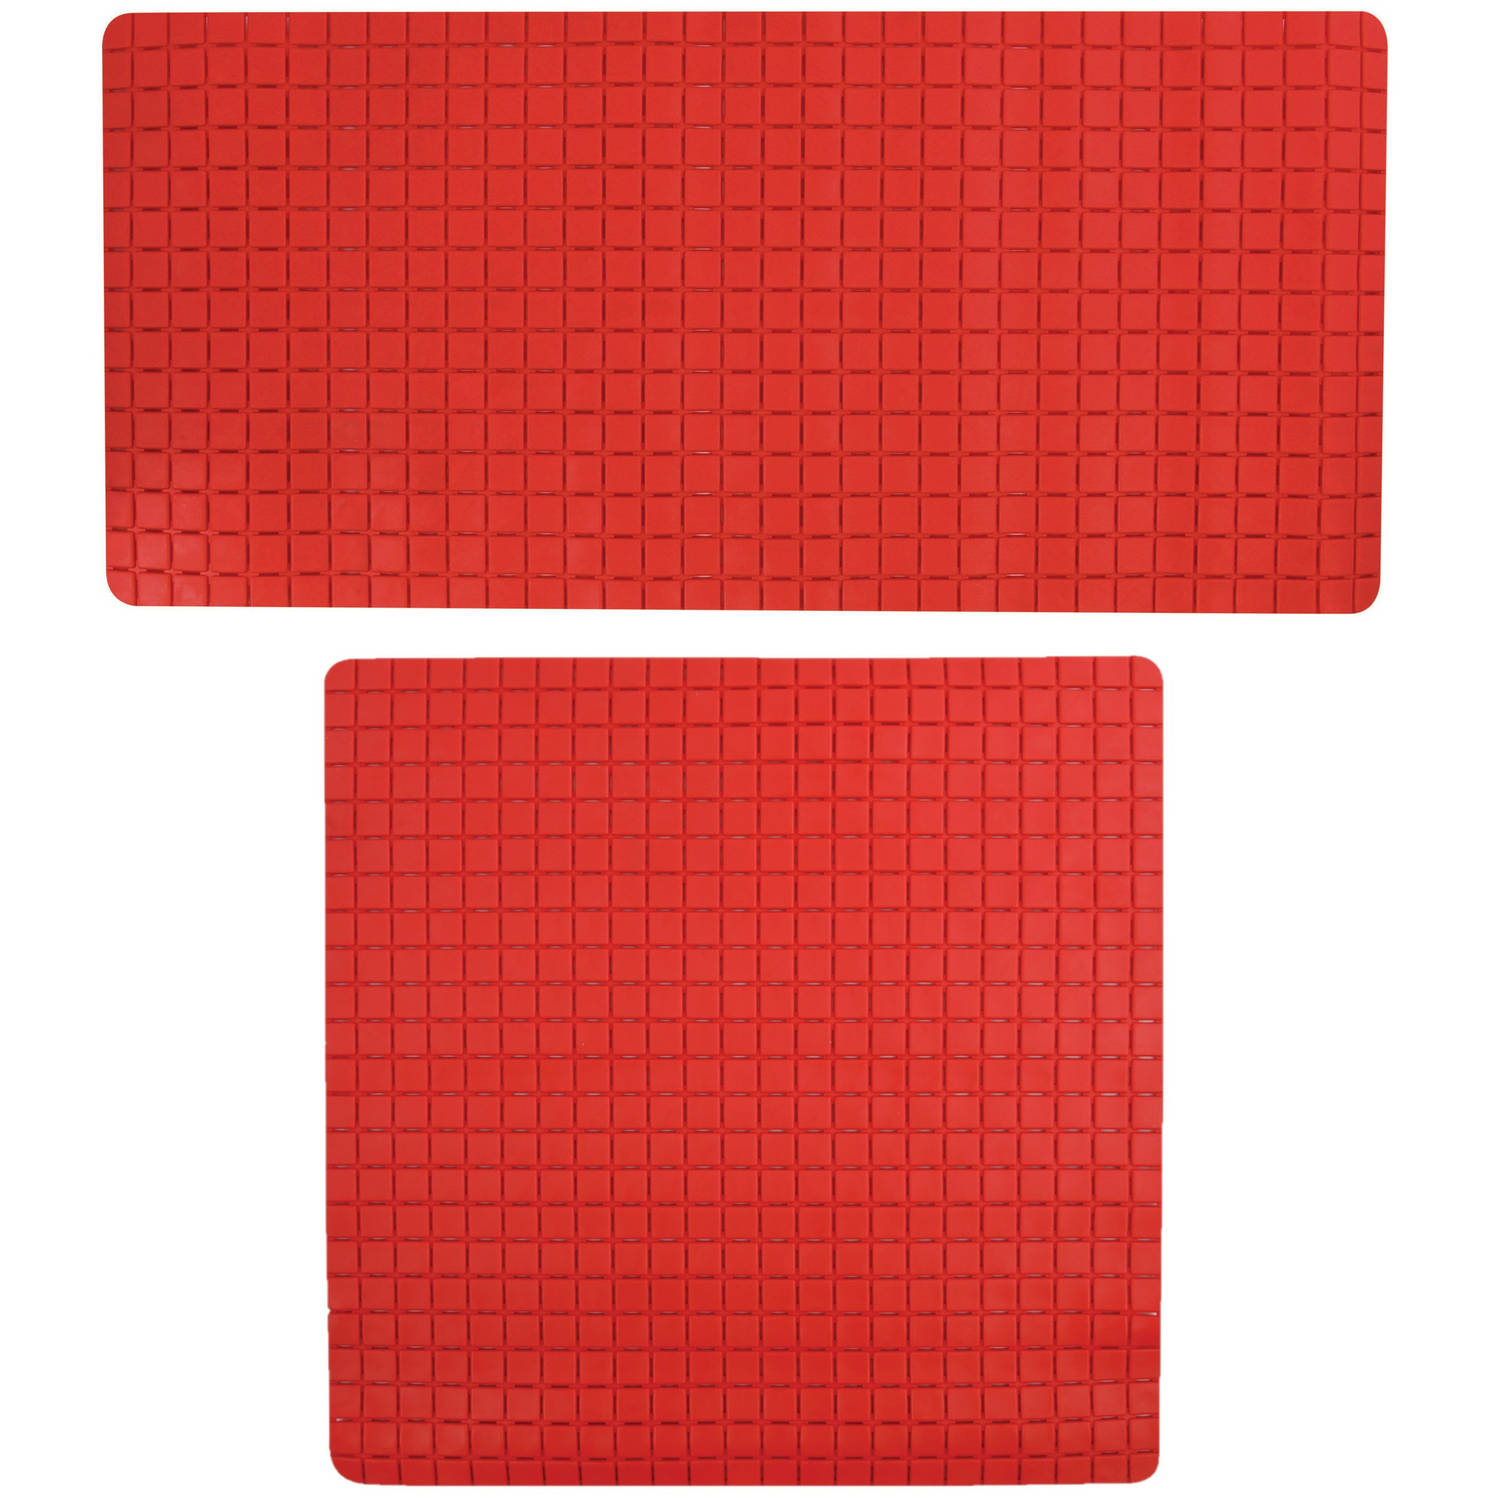 MSV Douche-bad anti-slip matten set badkamer rubber 2x stuks rood 2 formaten Badmatjes